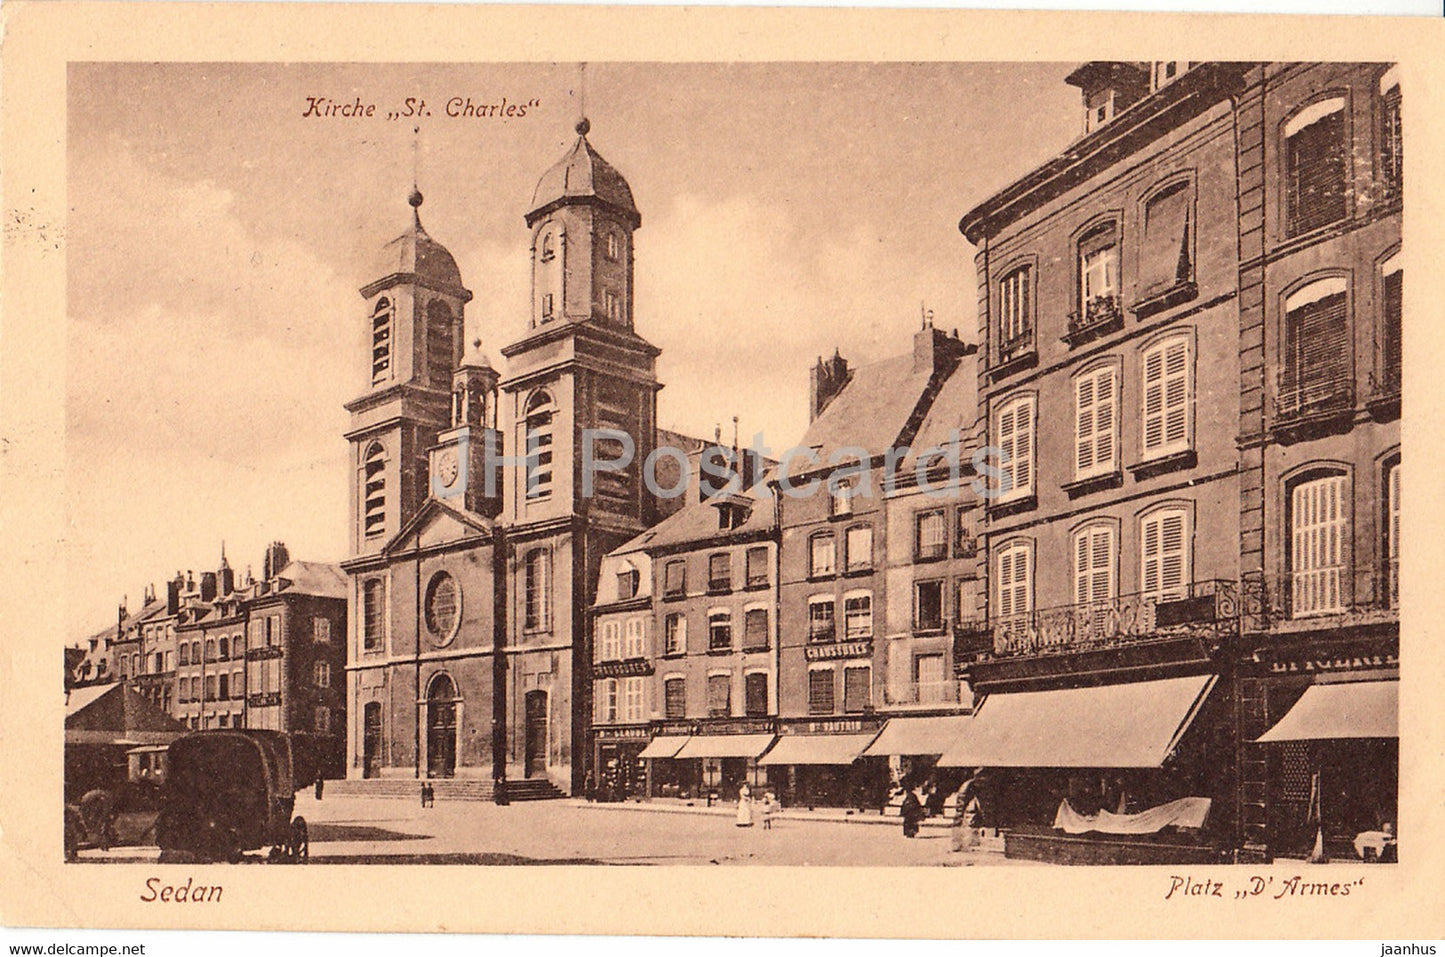 Sedan - Platz D'Armes - Kirche St Charles - church - 4000 - Feldpost - old postcard - France - used - JH Postcards